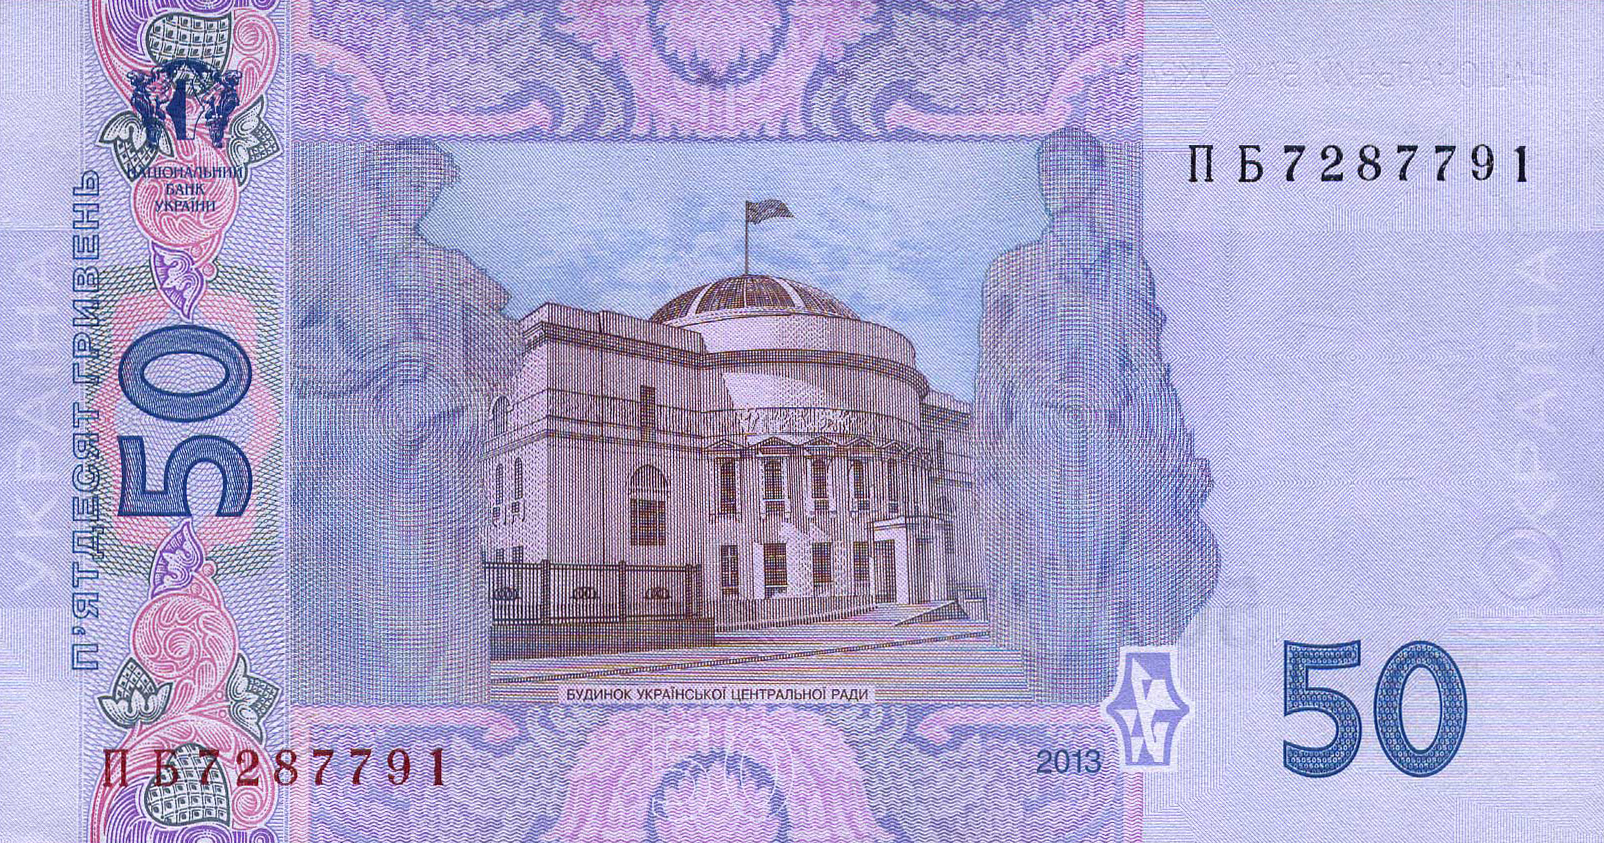 Ukraine new sig/date (2013) 50-hryvnia note (B850d) confirmed ...